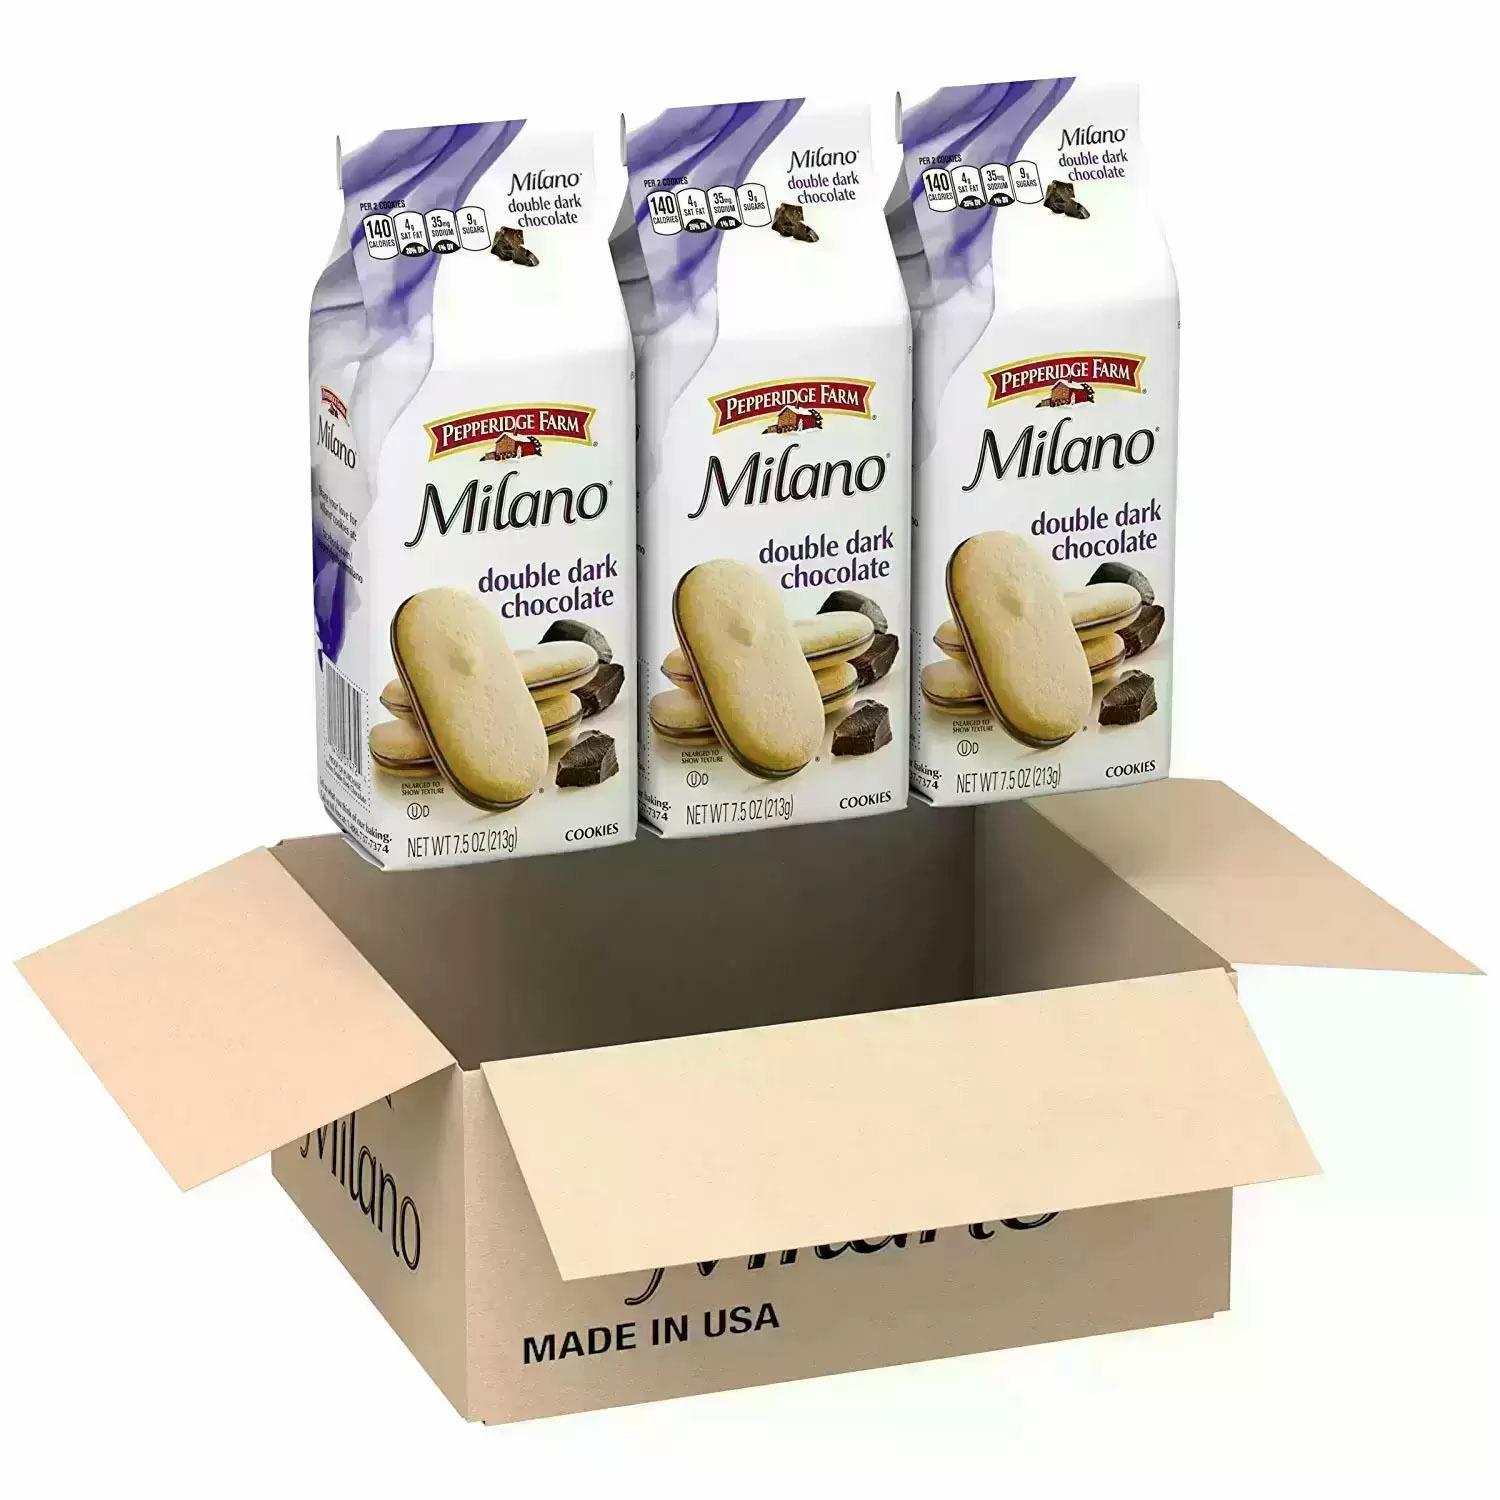 3 Packs of Pepperidge Farm Milano Cookies for $6.78 Shipped